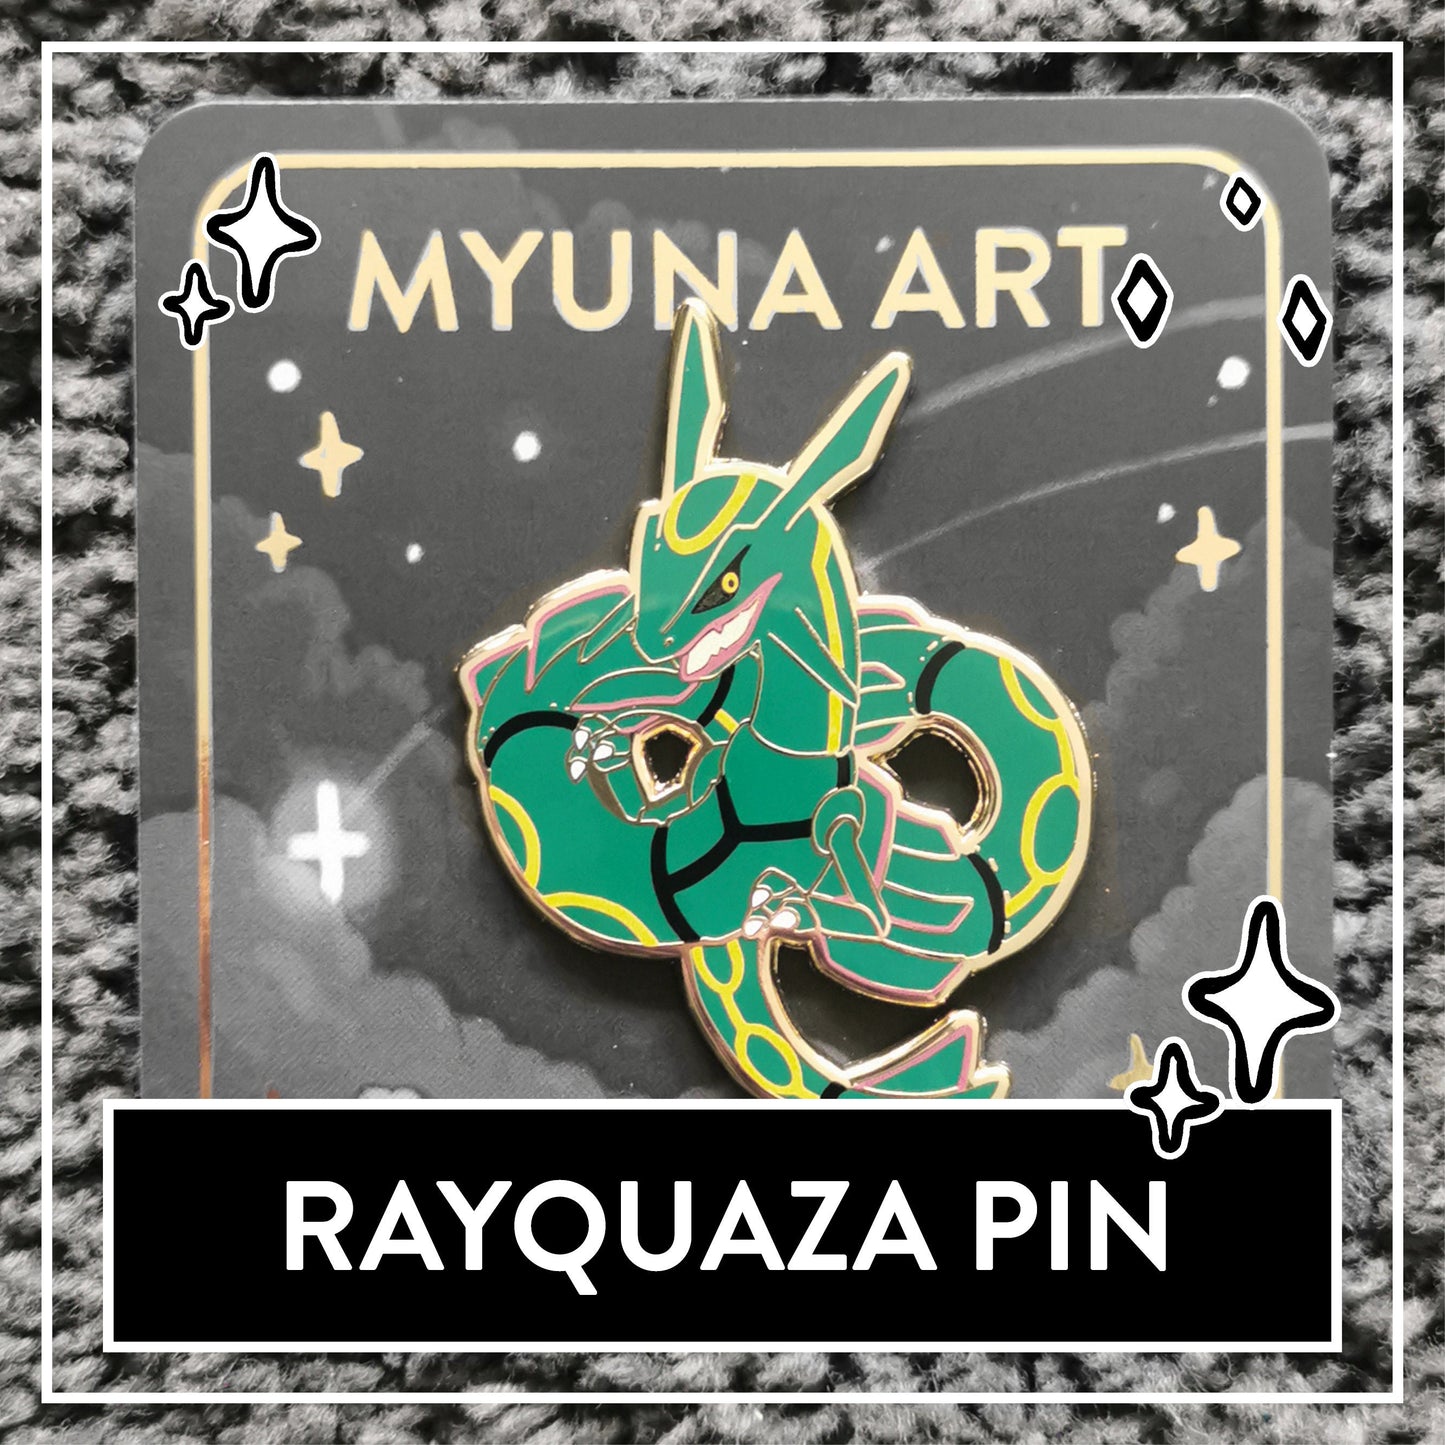 Myuna's XXL Rayquaza Pin – Big Fanart Sky Dragon Legendary Hard Enamel Pin with 4 pinback posts